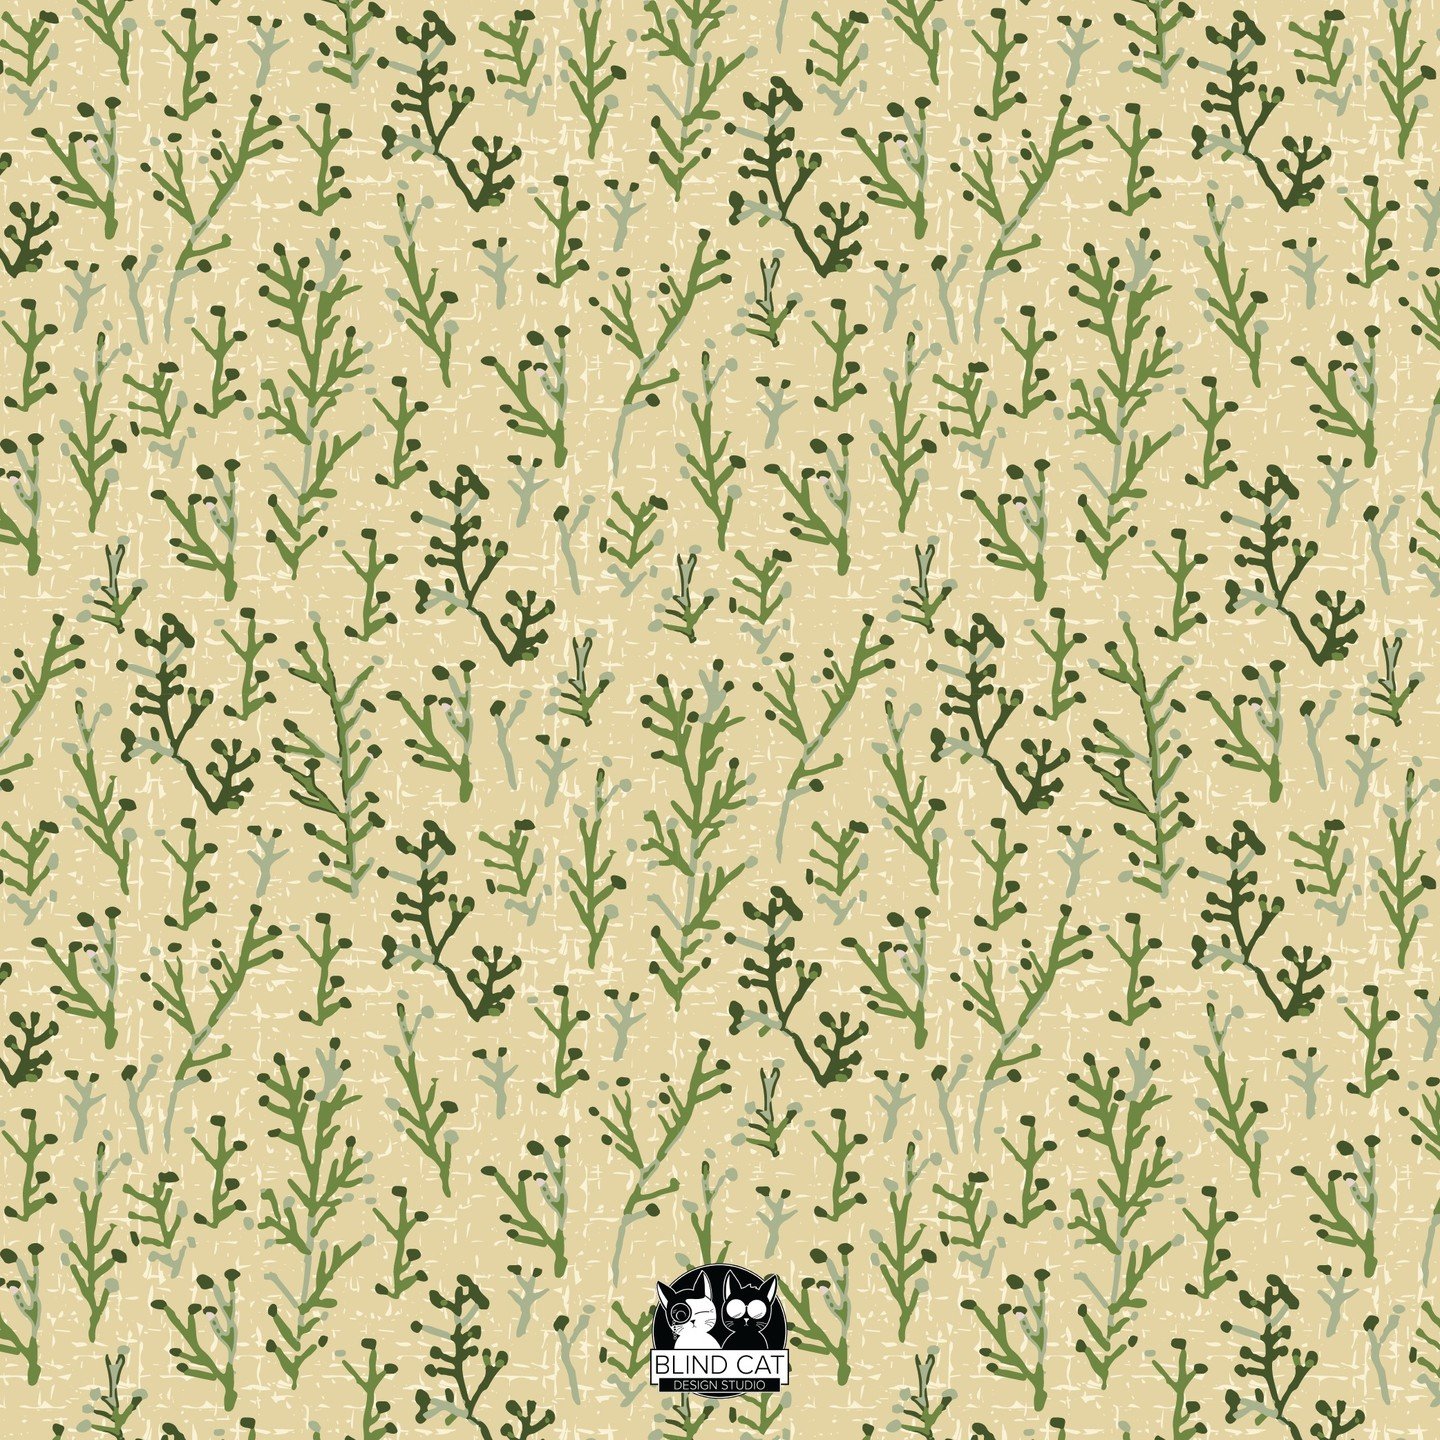 Another pattern from my collection, Mama's Garden
.
.
.
.
.
#blindcatdesign #surfacepattern #patterndesign #surfacepatterndesign #surfacedesign #pattern #textiledesign #patterndesigner #surfacepatterndesigner #printandpattern #surfacepatterncommunity